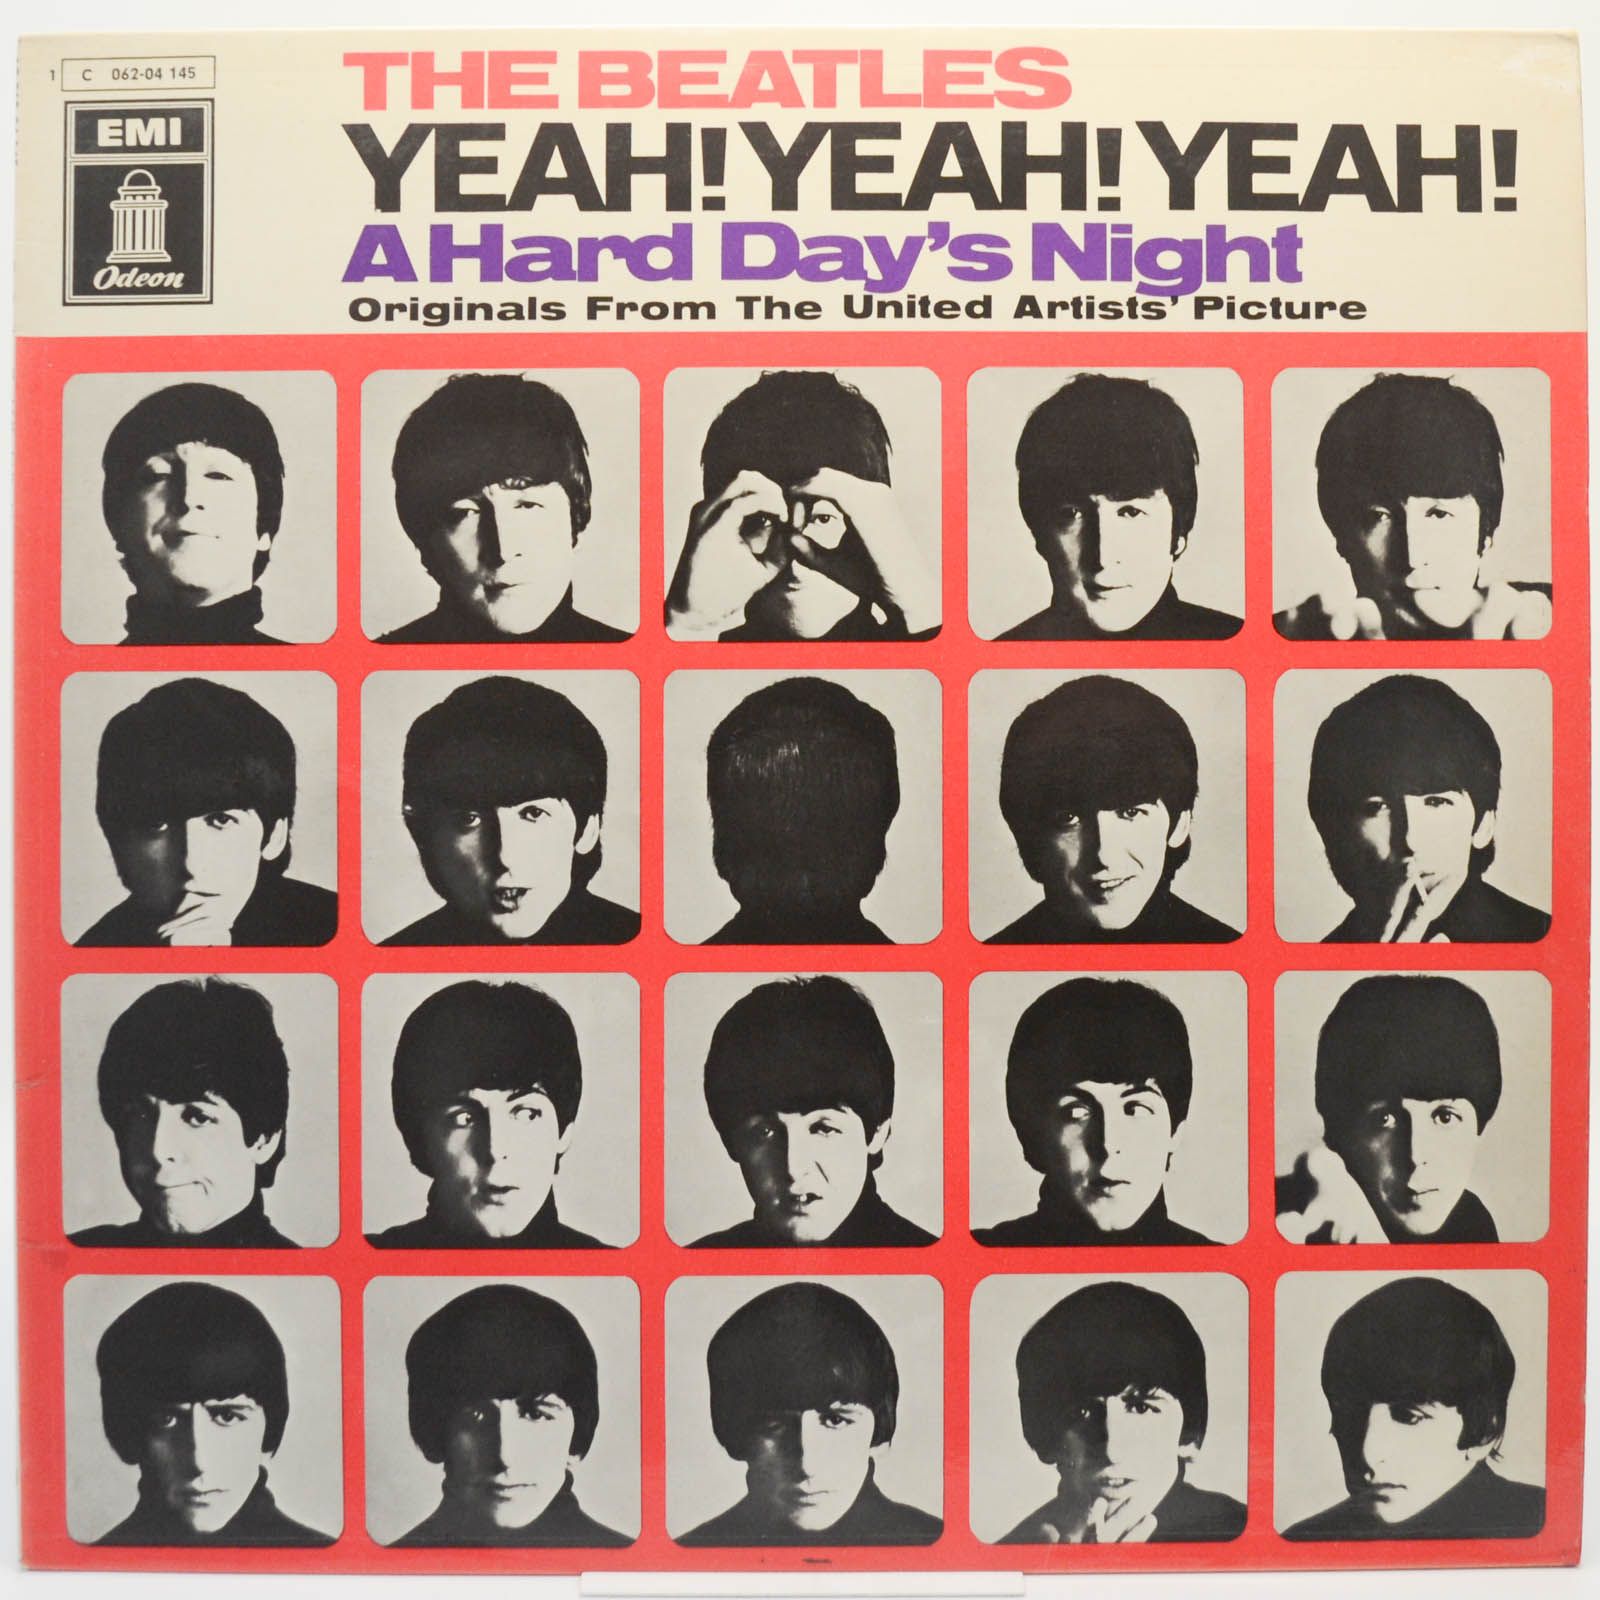 The beatles a hard day s night. The Beatles a hard Day's Night 1964. The Beatles a hard Day's Night обложка. The Beatles a hard Day's Night 1964 альбом. Обложка пластинки Beatles.